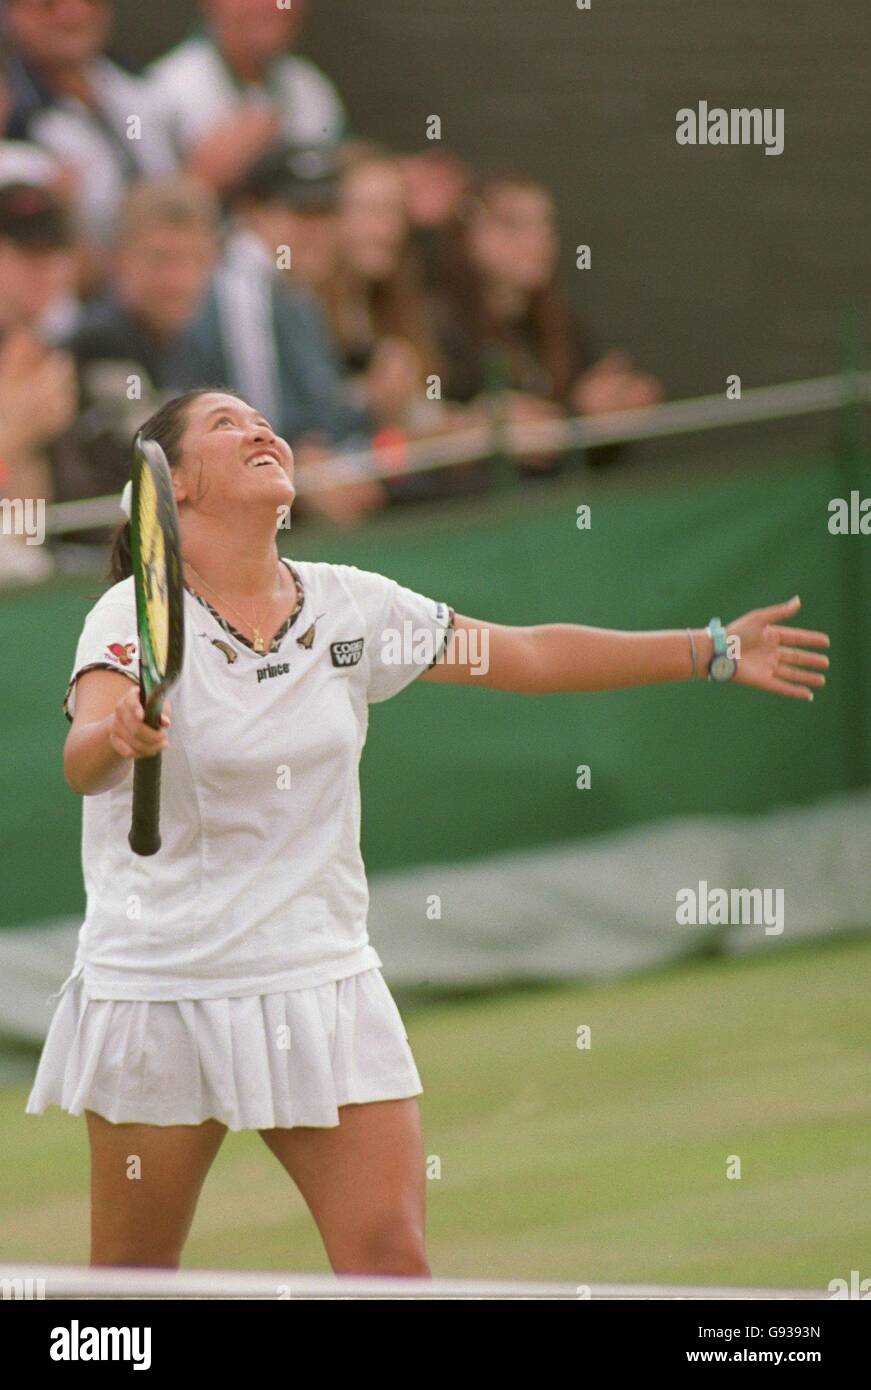 Tennis - Wimbledon Championship - Women's Singles - Round Four - Martina Hingis v Tamarine Tanasugarn. Tamarine Tanasugarn celebrates after gwinning a point against Martina Hingis Stock Photo